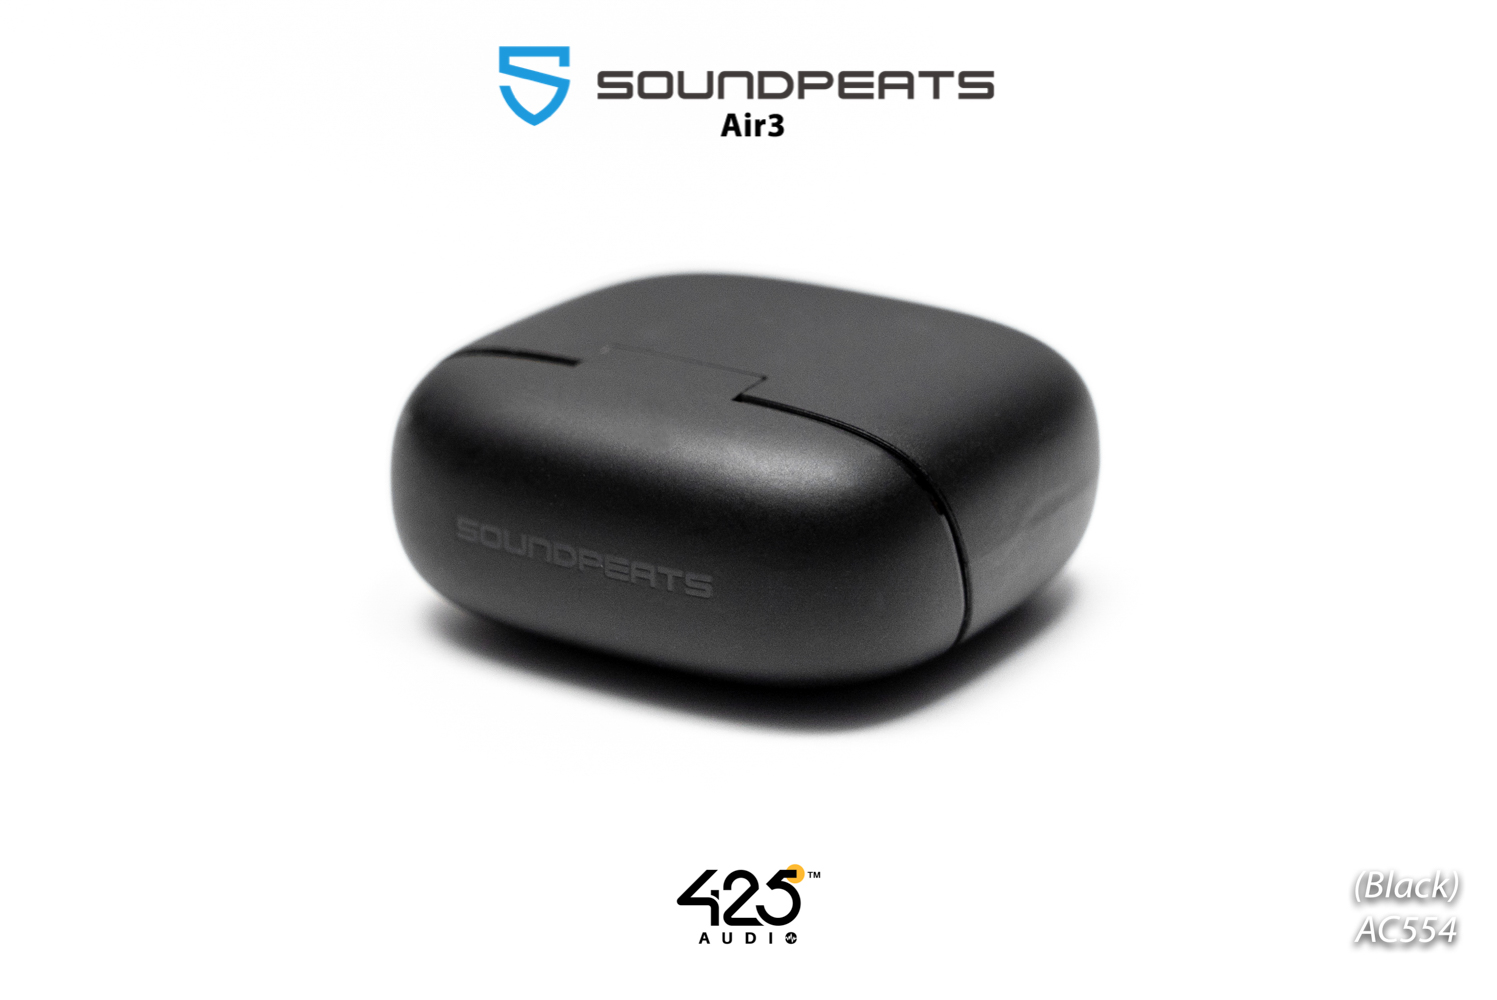 soundpeats air3,air3,หูฟังไร้สาย,headphone,ipx5,เบสหนัก,earbud,aptx